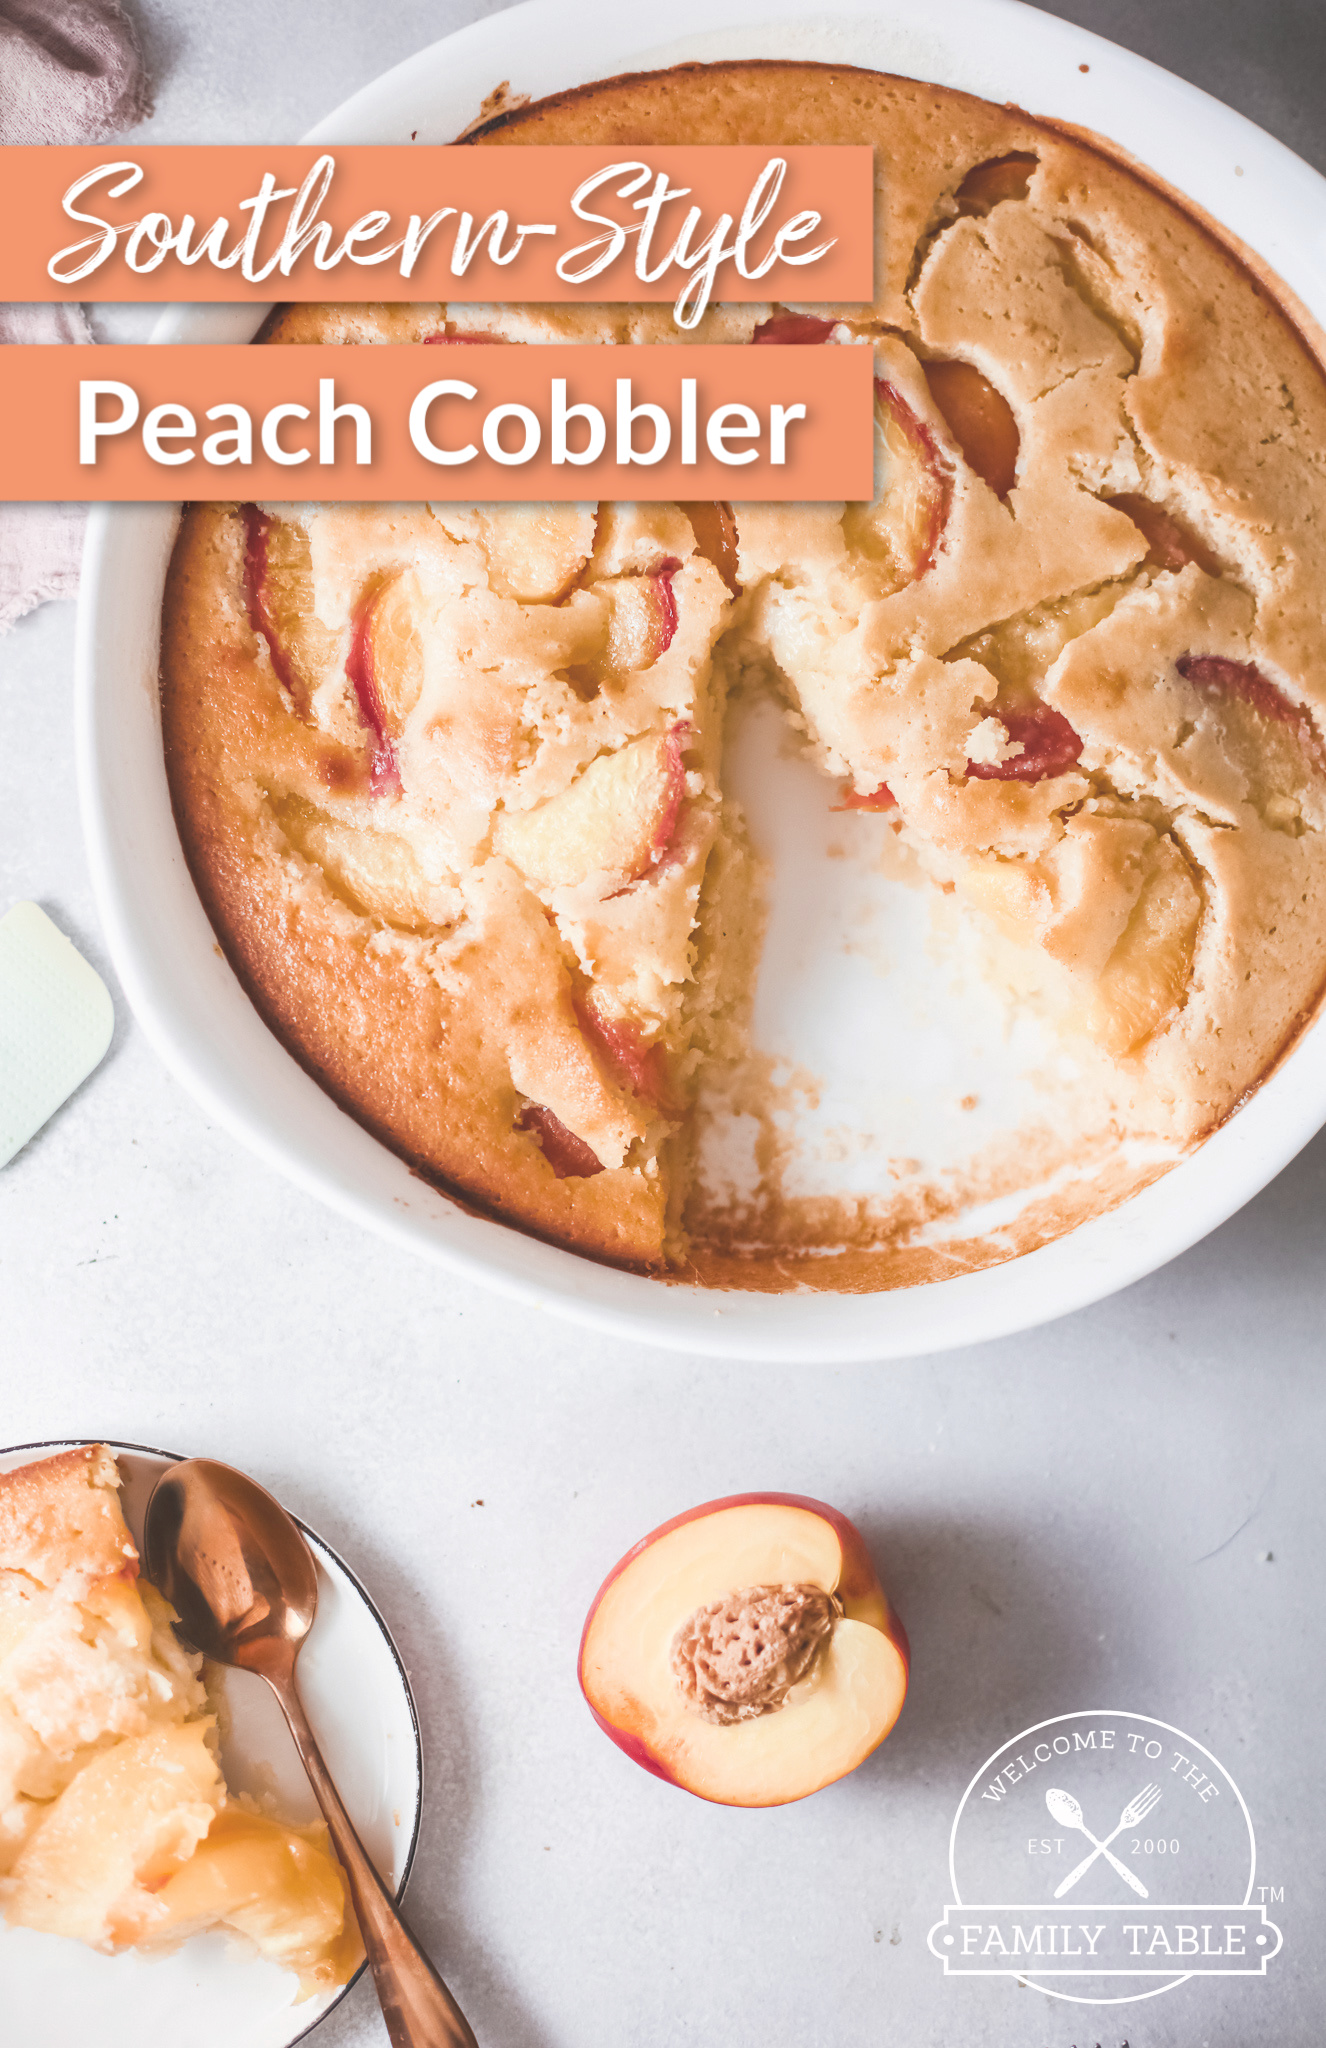 Southern-Style Peach Cobbler Recipe